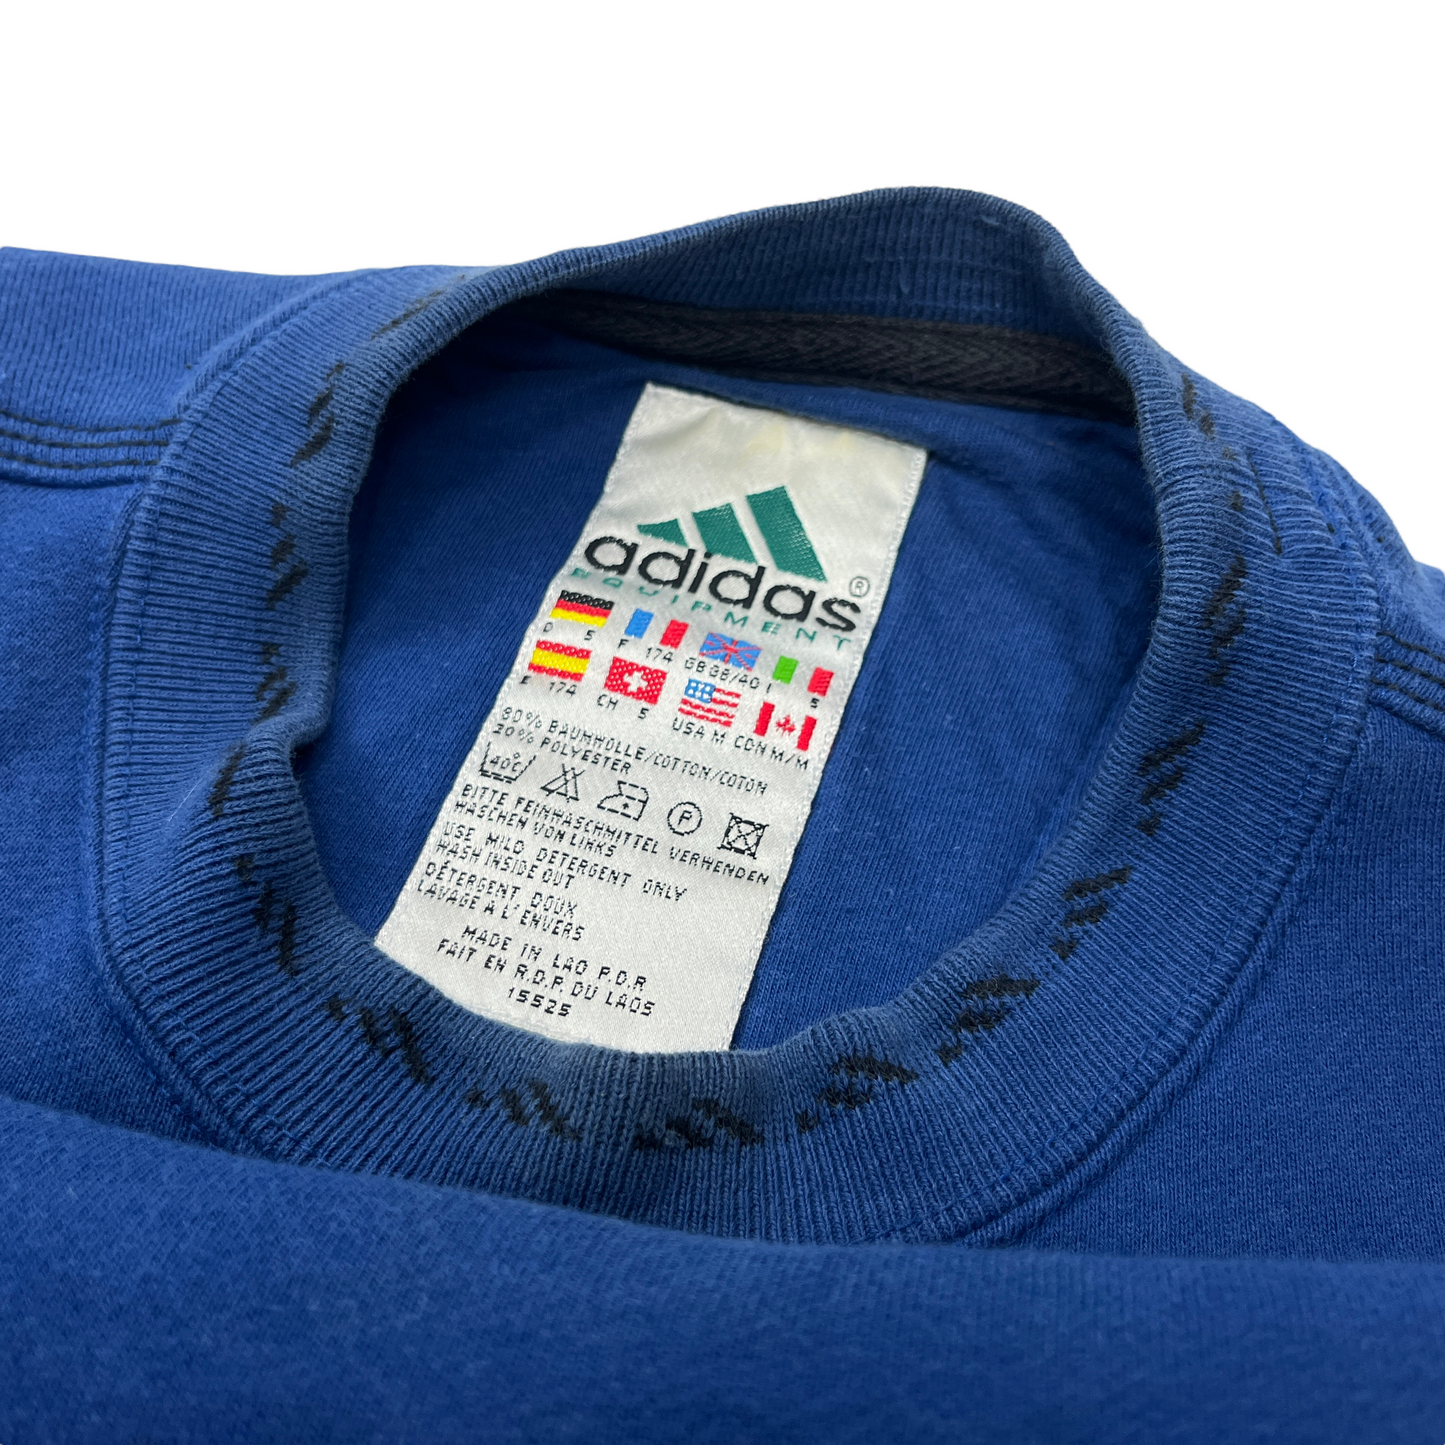 01054 Adidas 90s Equipment Sweater